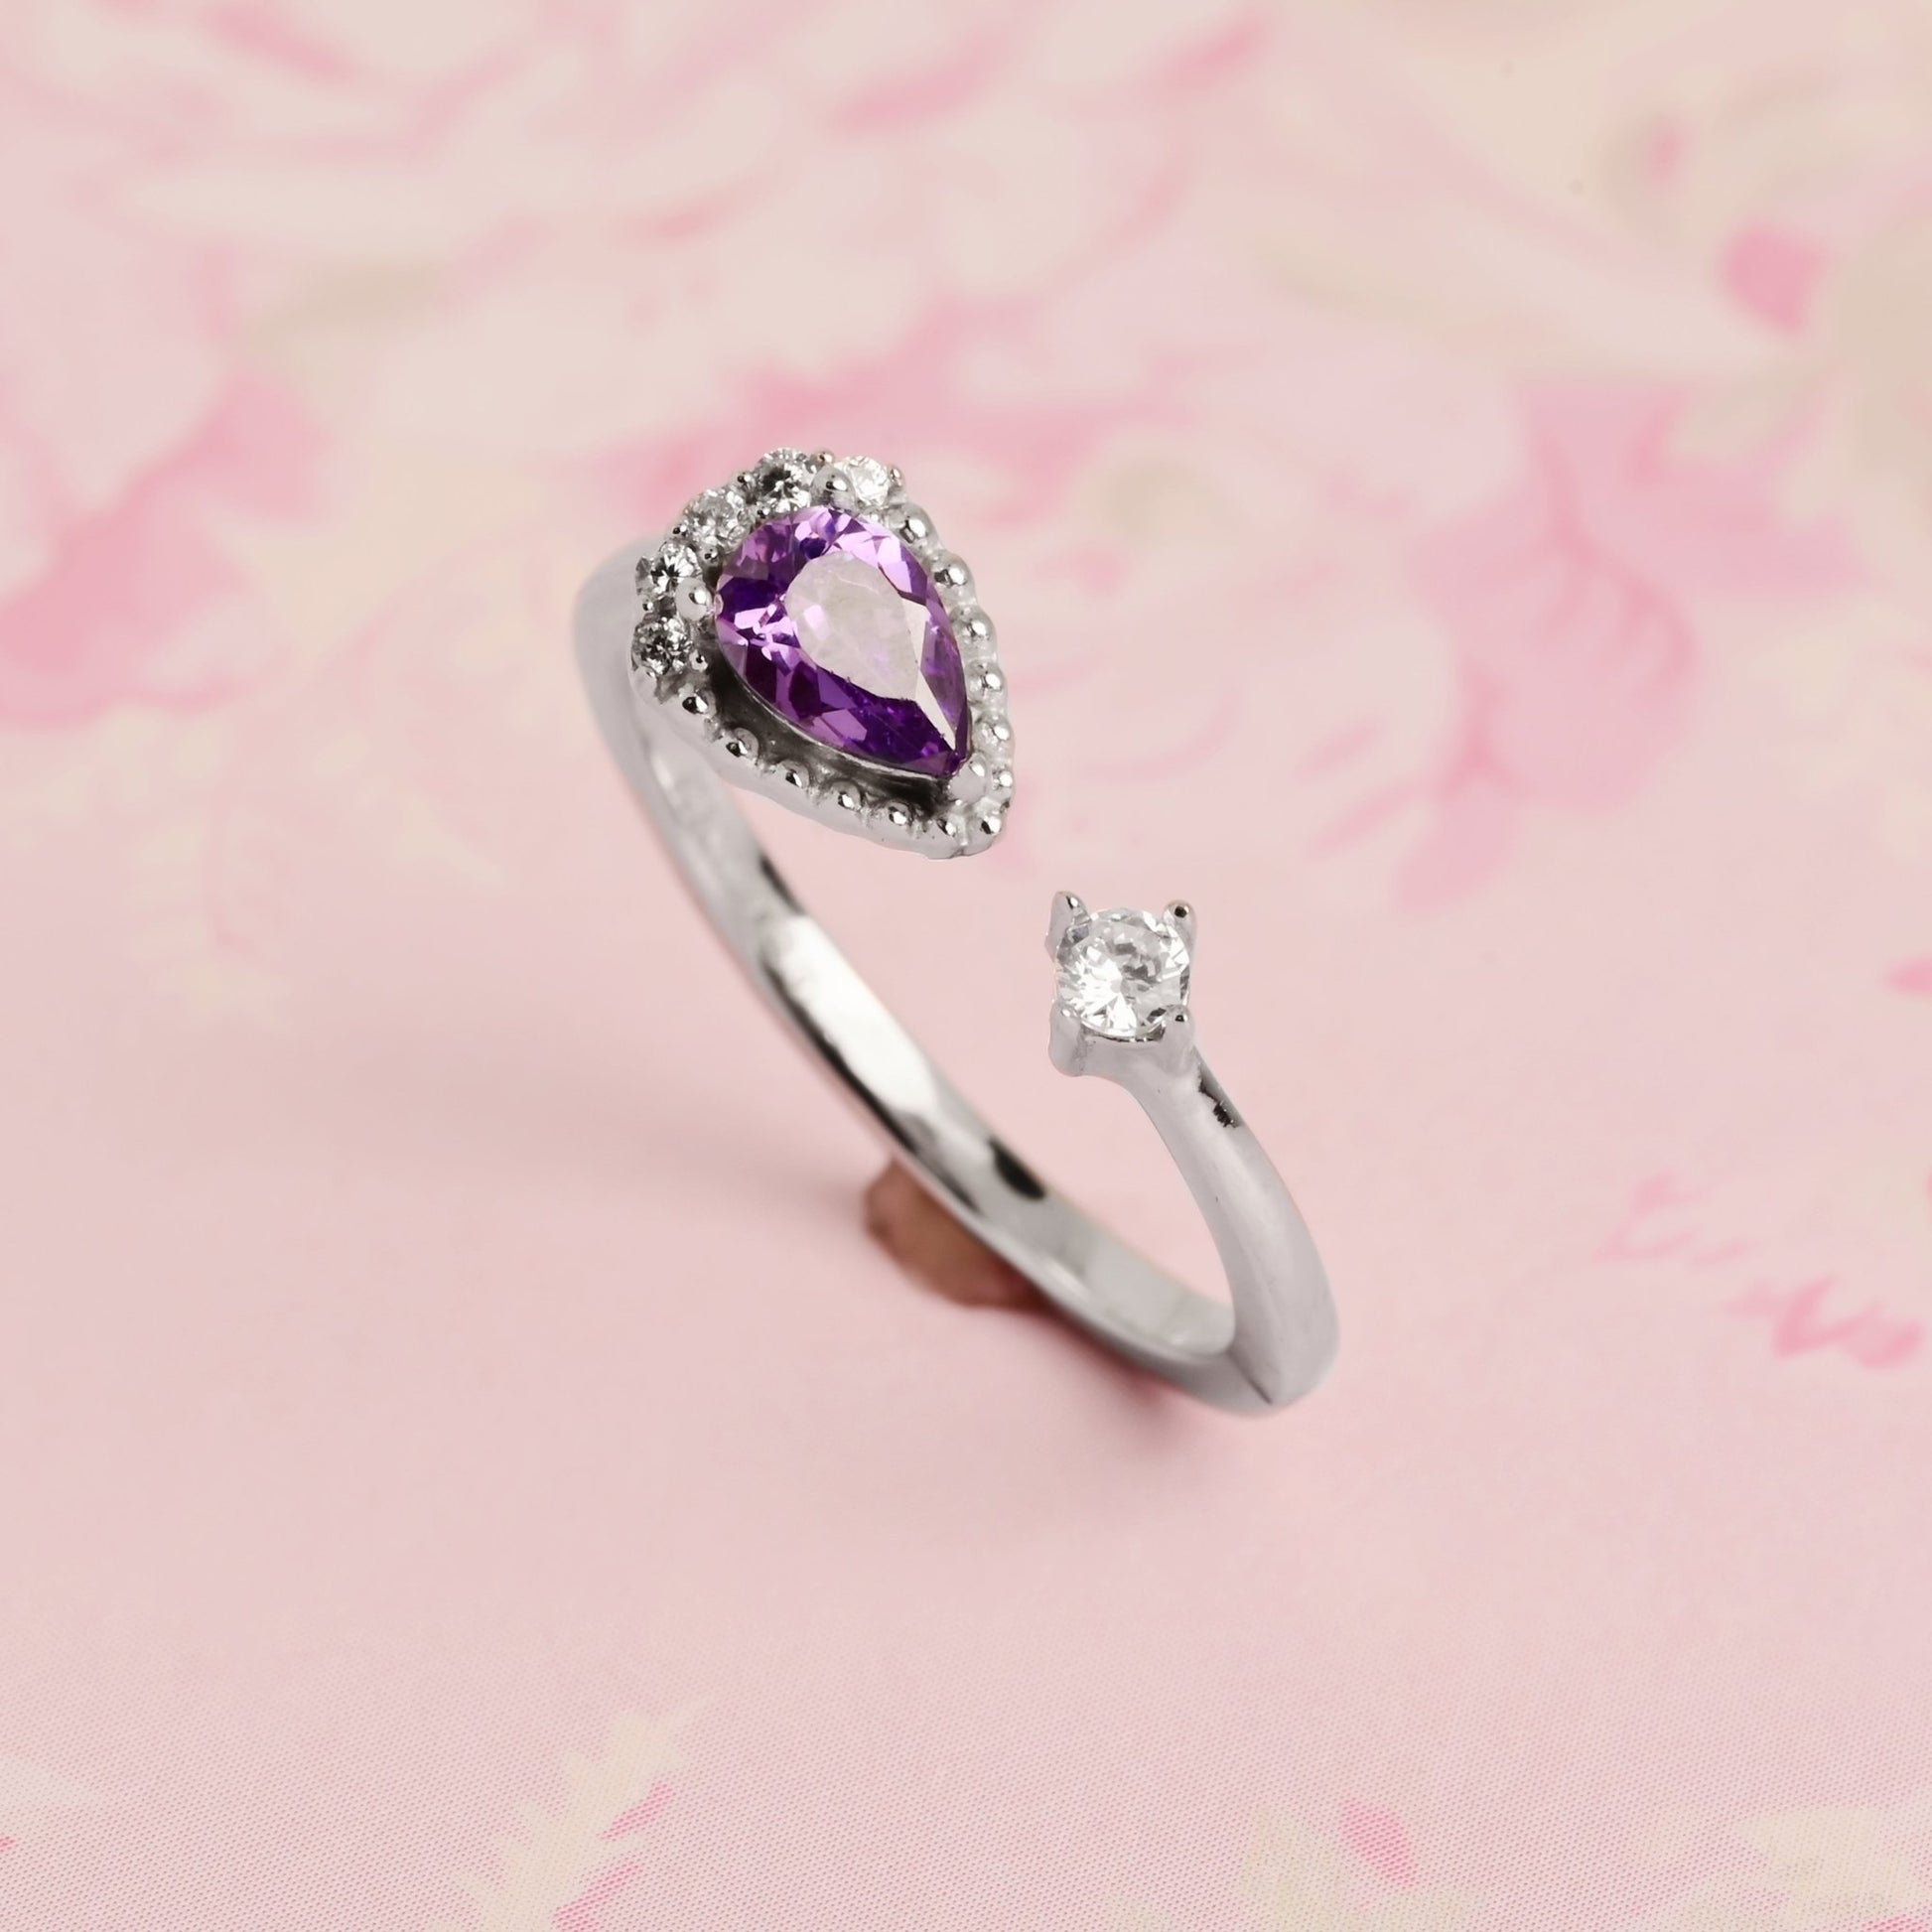 The Purple Zirconia Ring - Vinayak - House of Silver